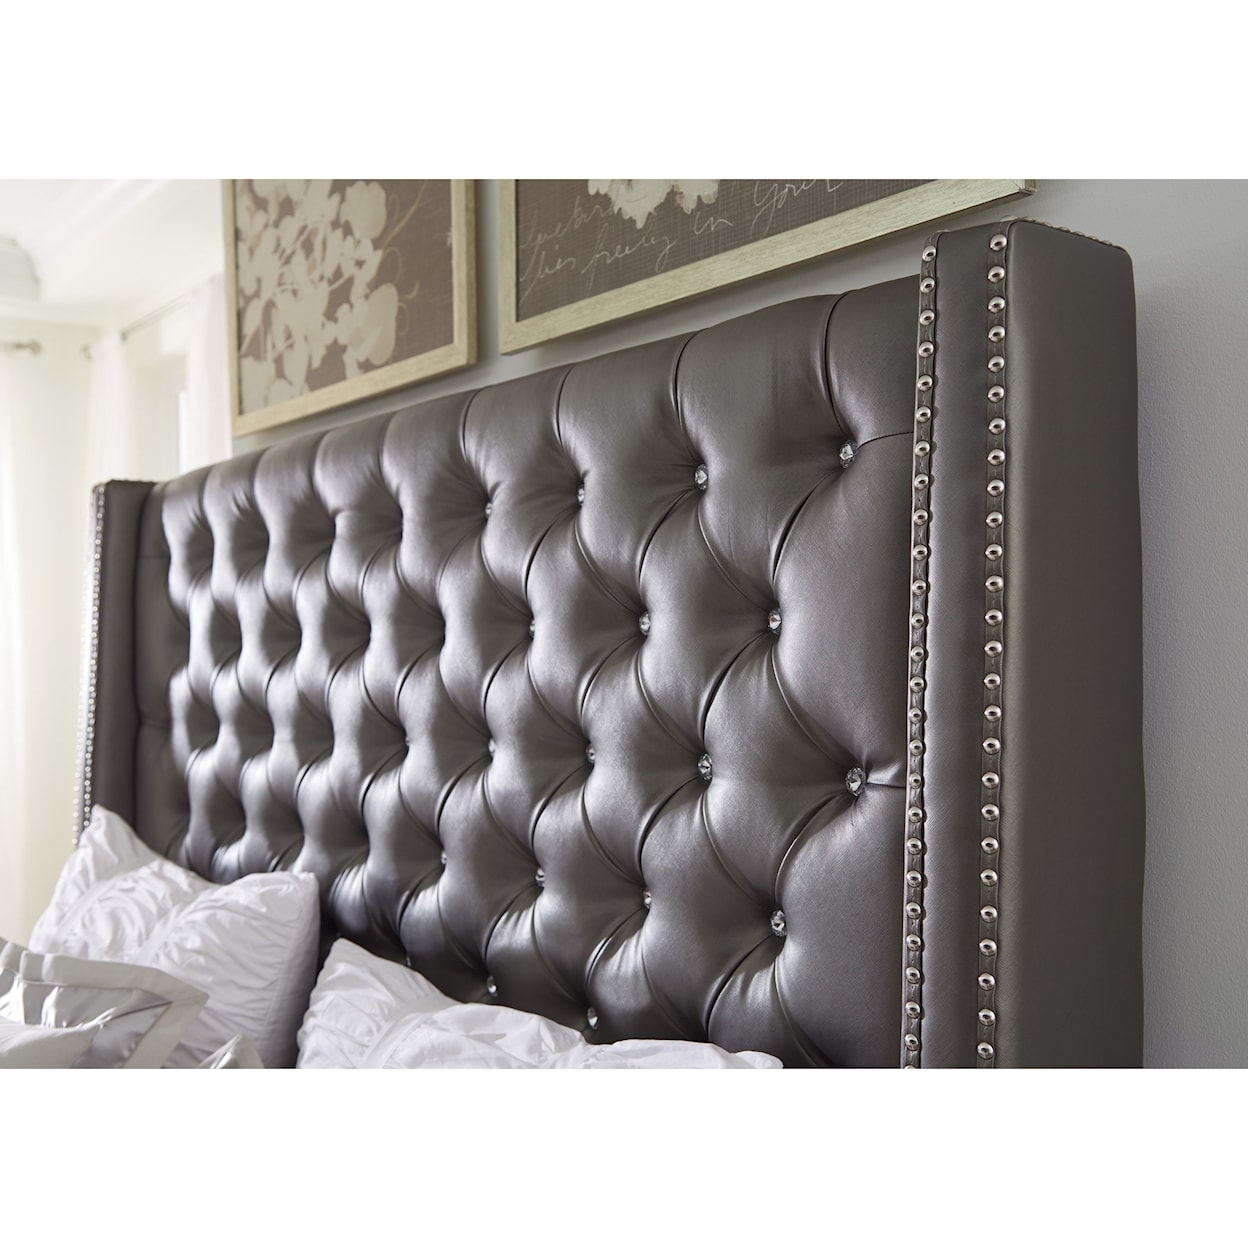 Ashley Signature Design Coralayne California King Upholstered Bed